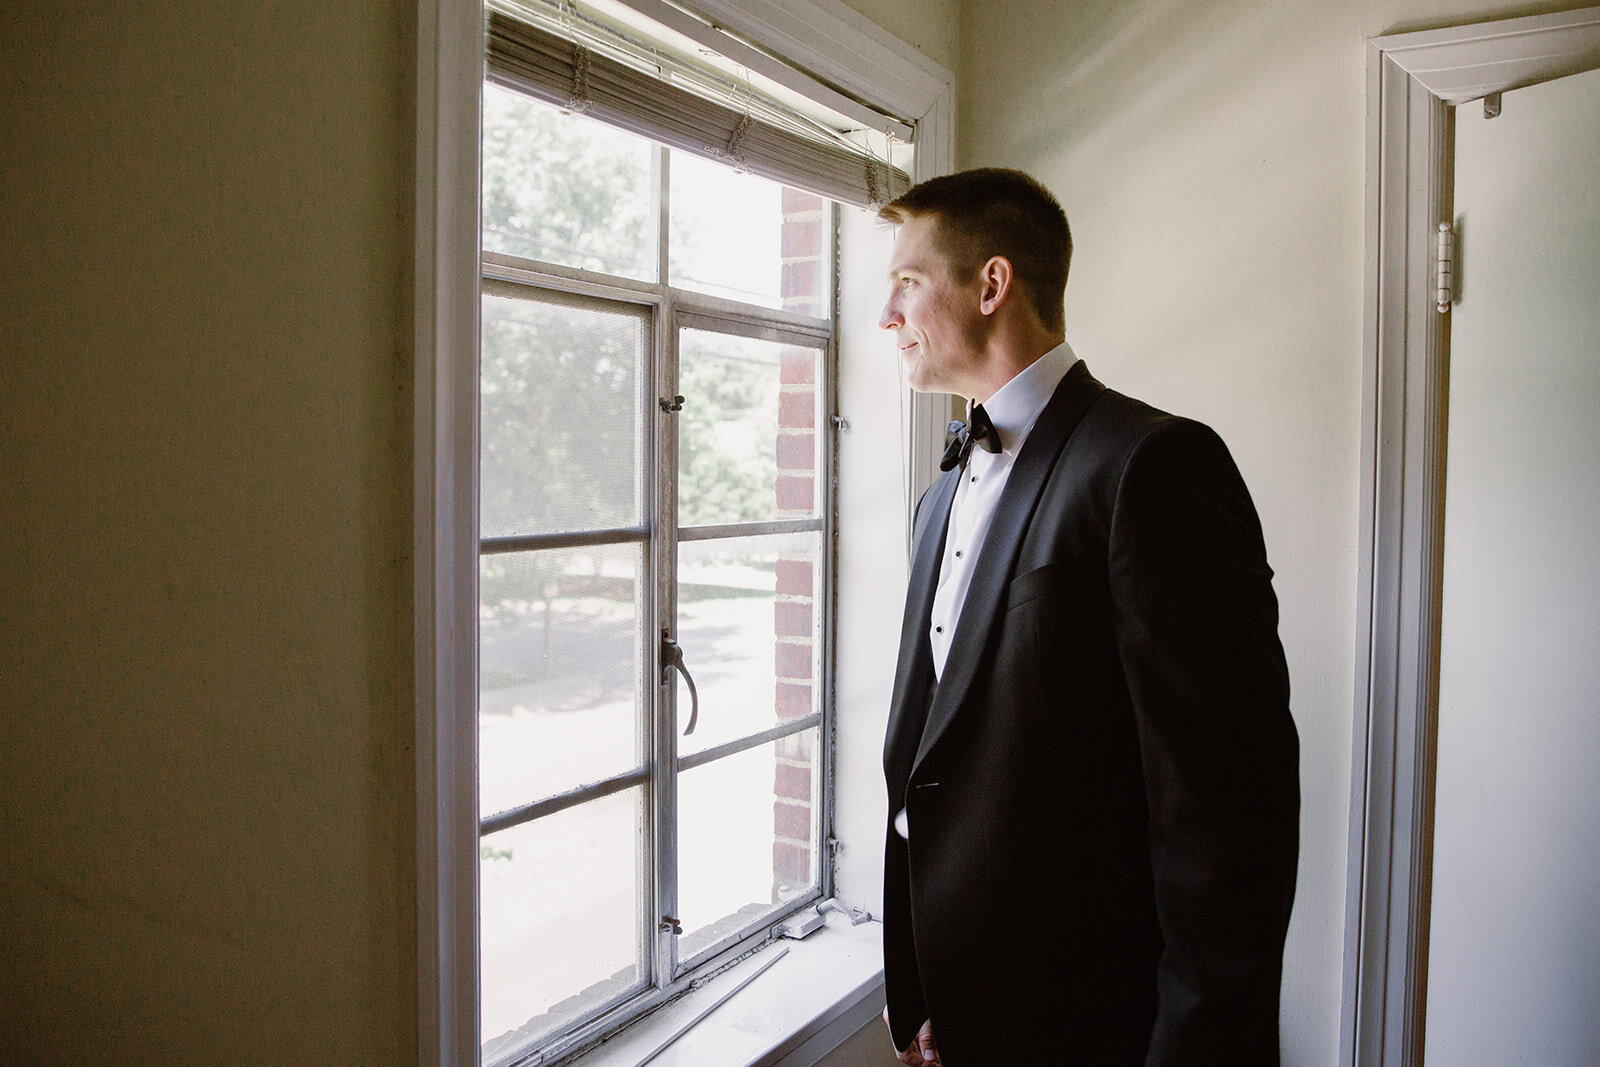  Groom Getting Ready | Sarah Mattozzi Photography | Ball Gown Wedding Dress and Black Tux | Outdoor Classic Wedding at Third Church and Veritas School | Richmond Wedding Photographer 